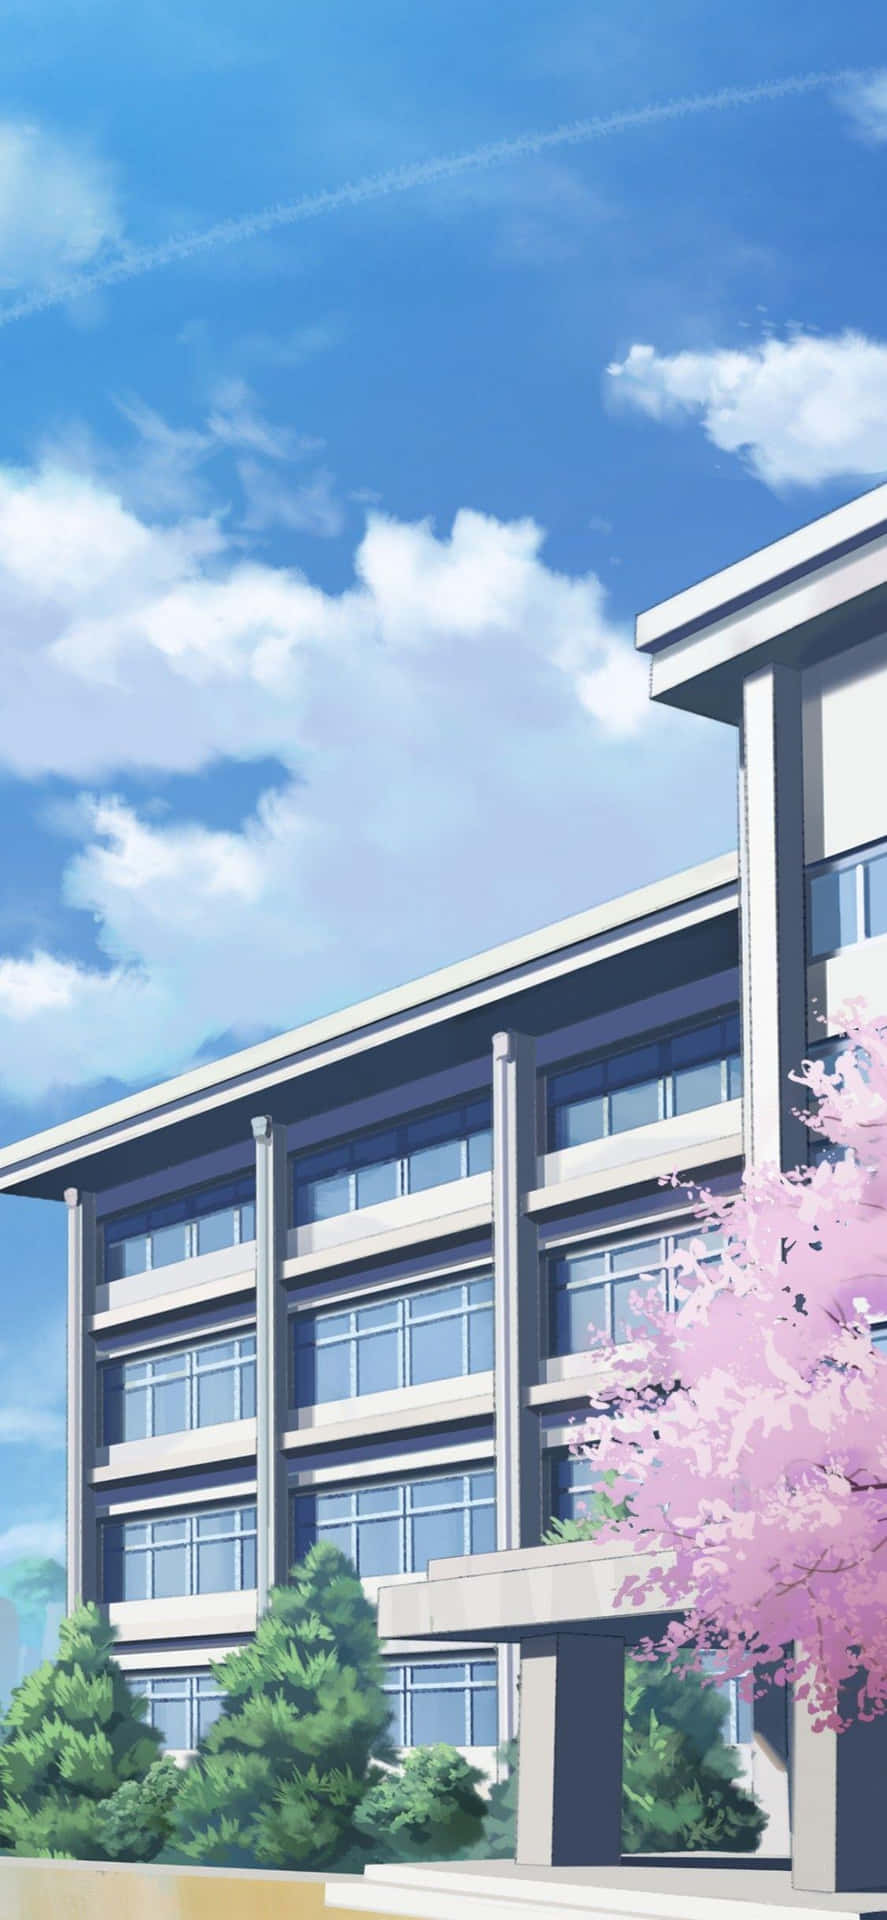 Anime School Building Sakura Wallpaper